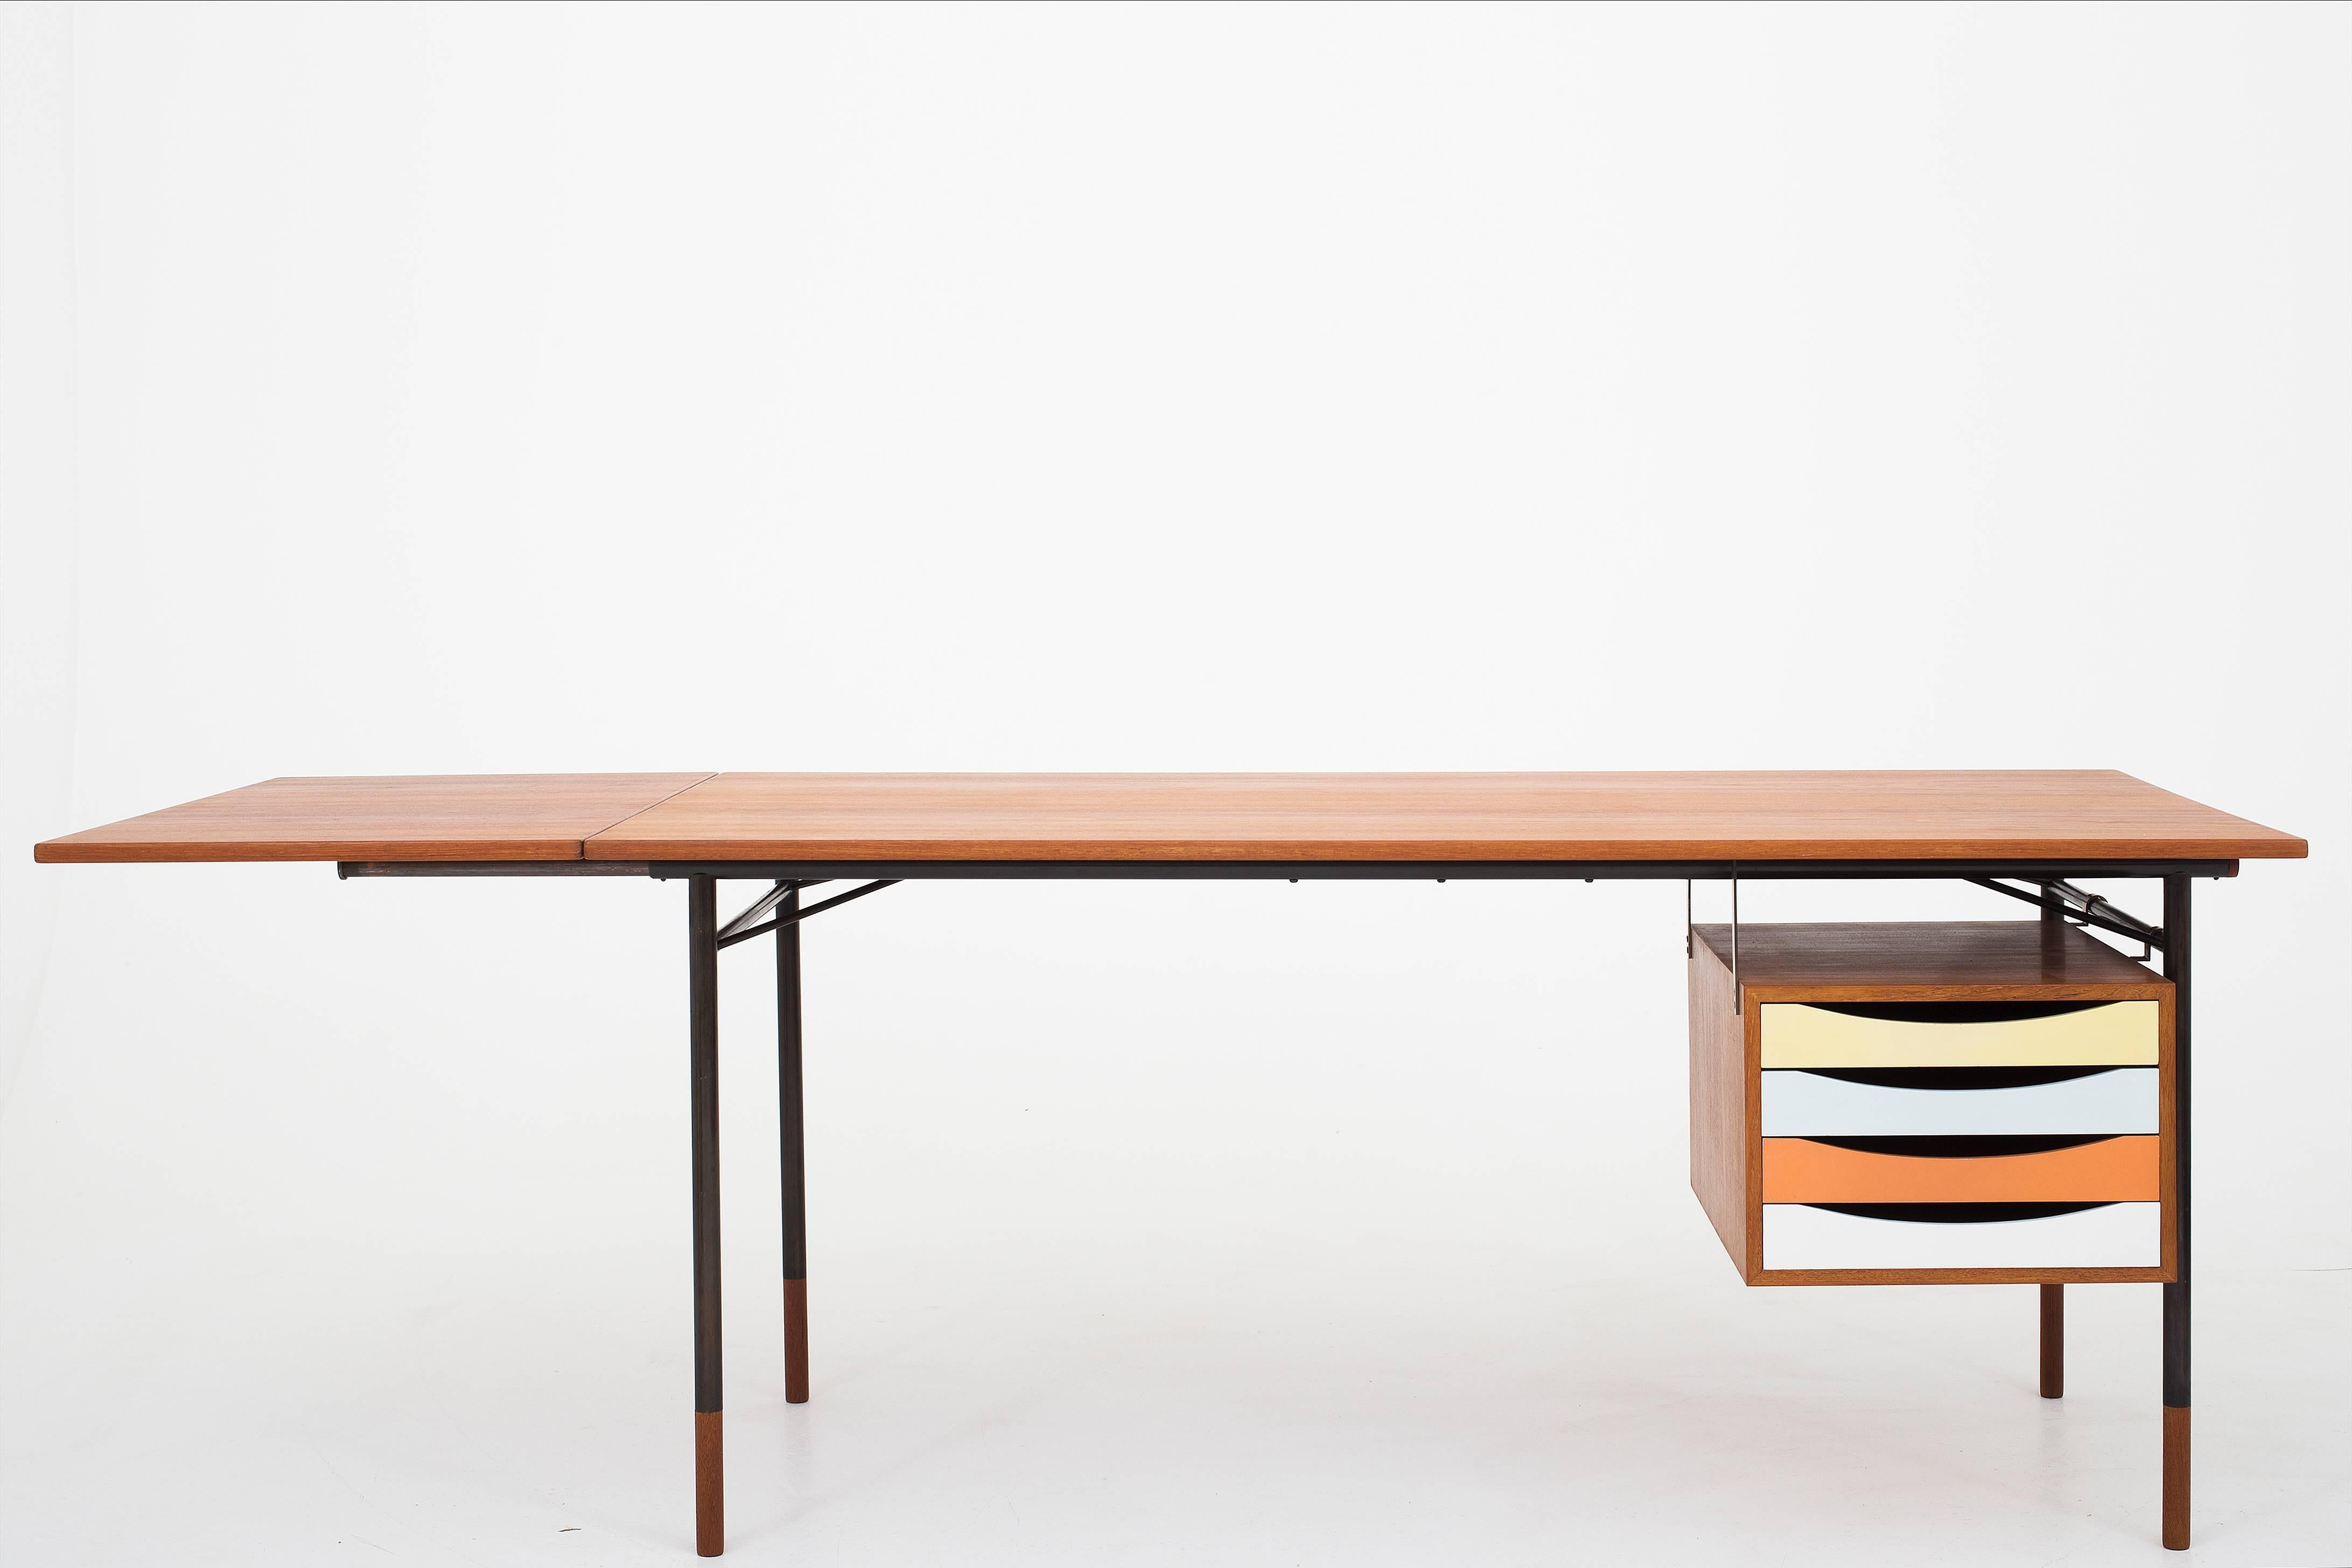 Finn Juhl BO 69 Nyhavn desk, base in steel, tabletop and shoes in teak. Maker Bovirke.